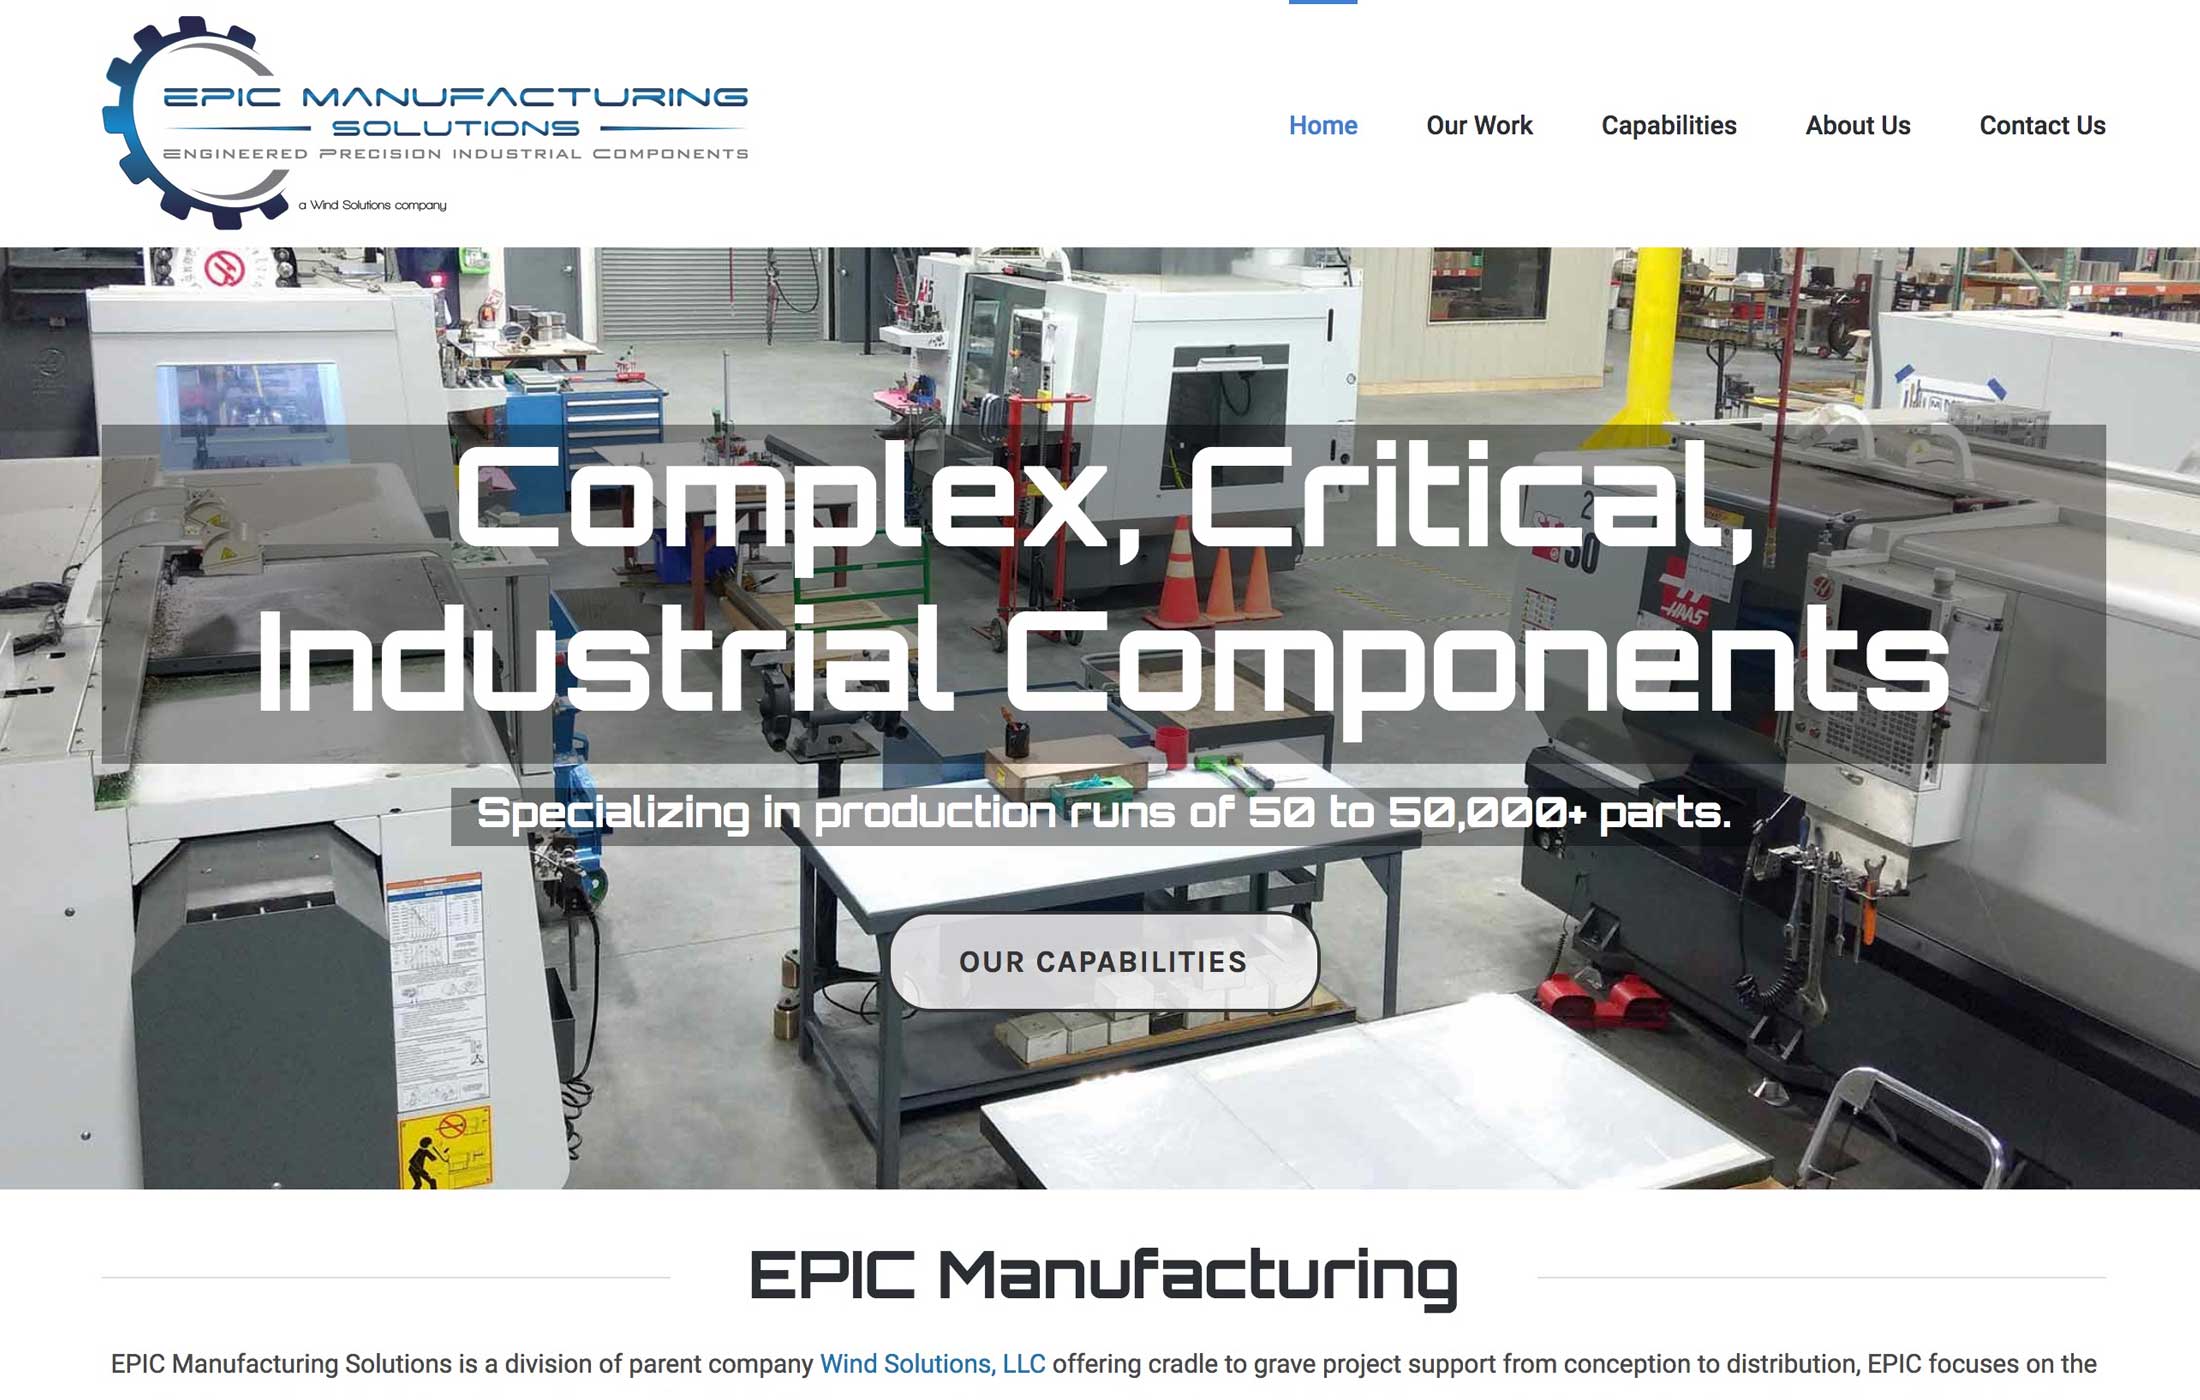 Epic Manufacturing